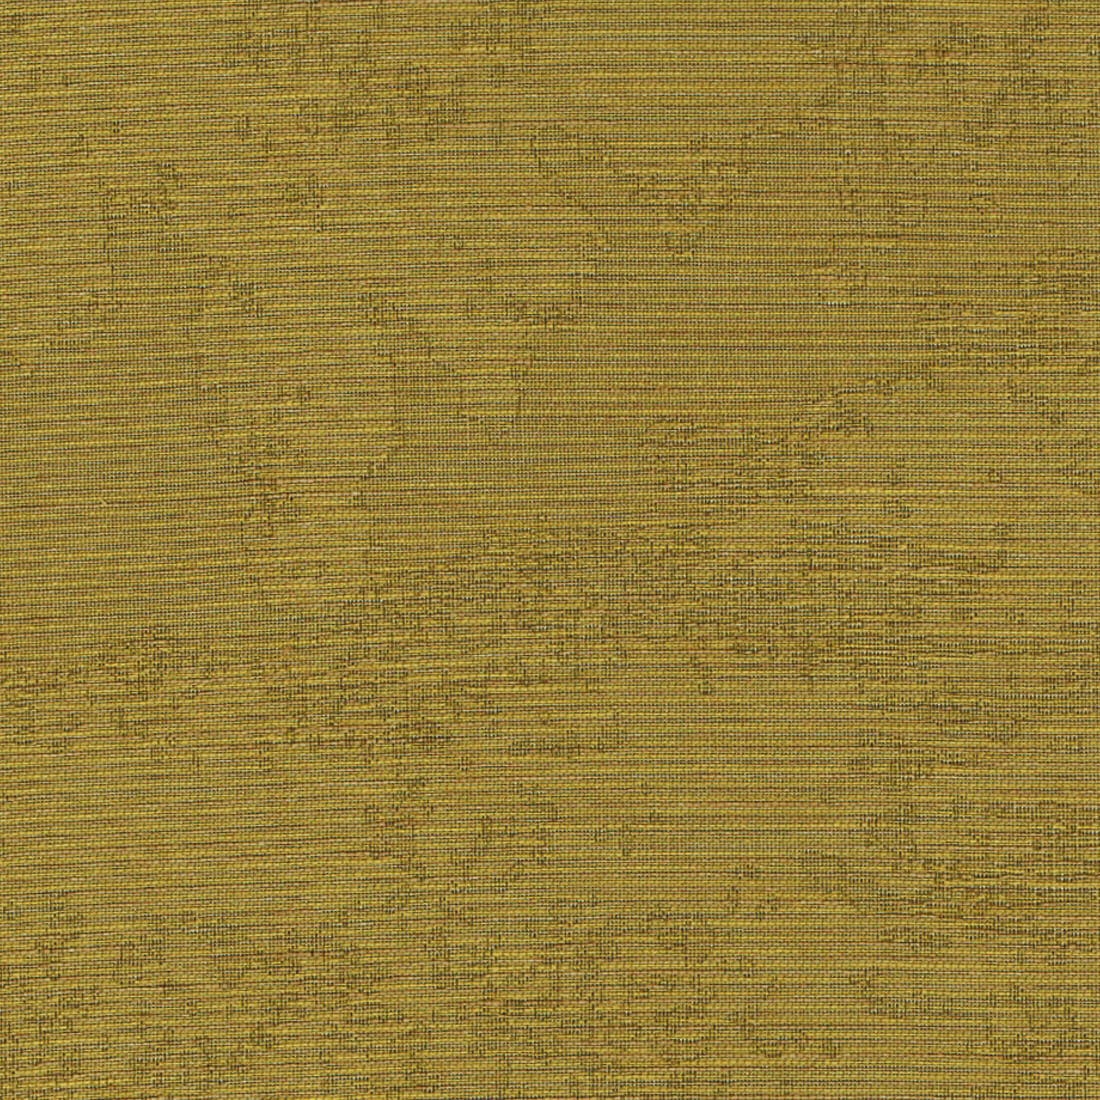 Tweed Gold 151408